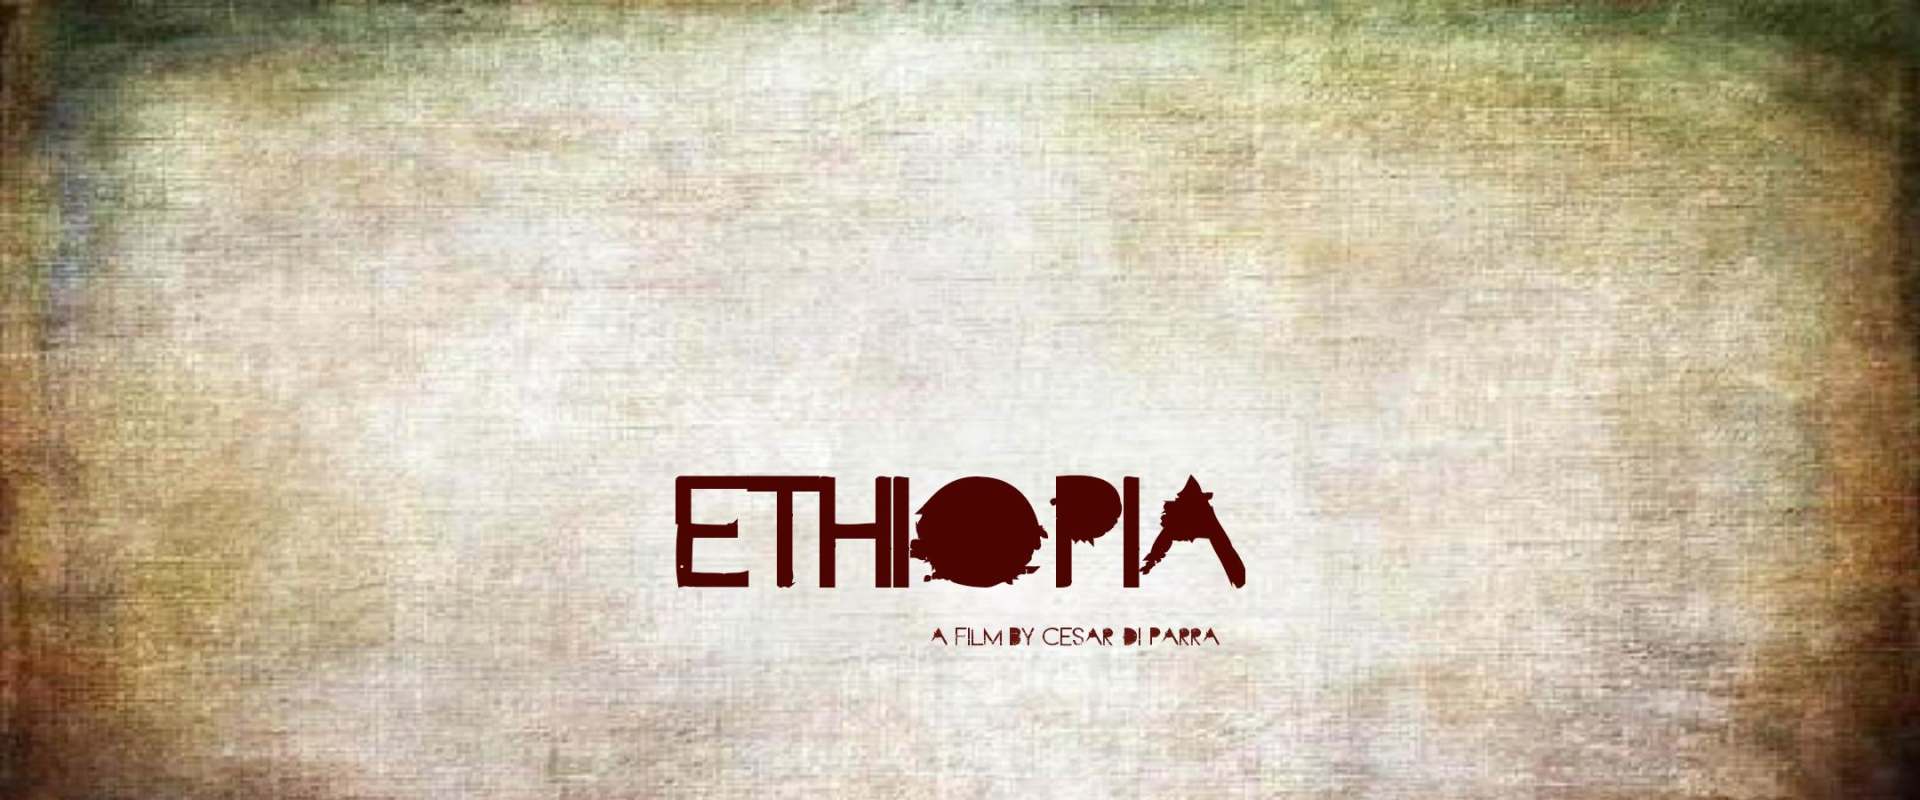 Ethiopia background 1